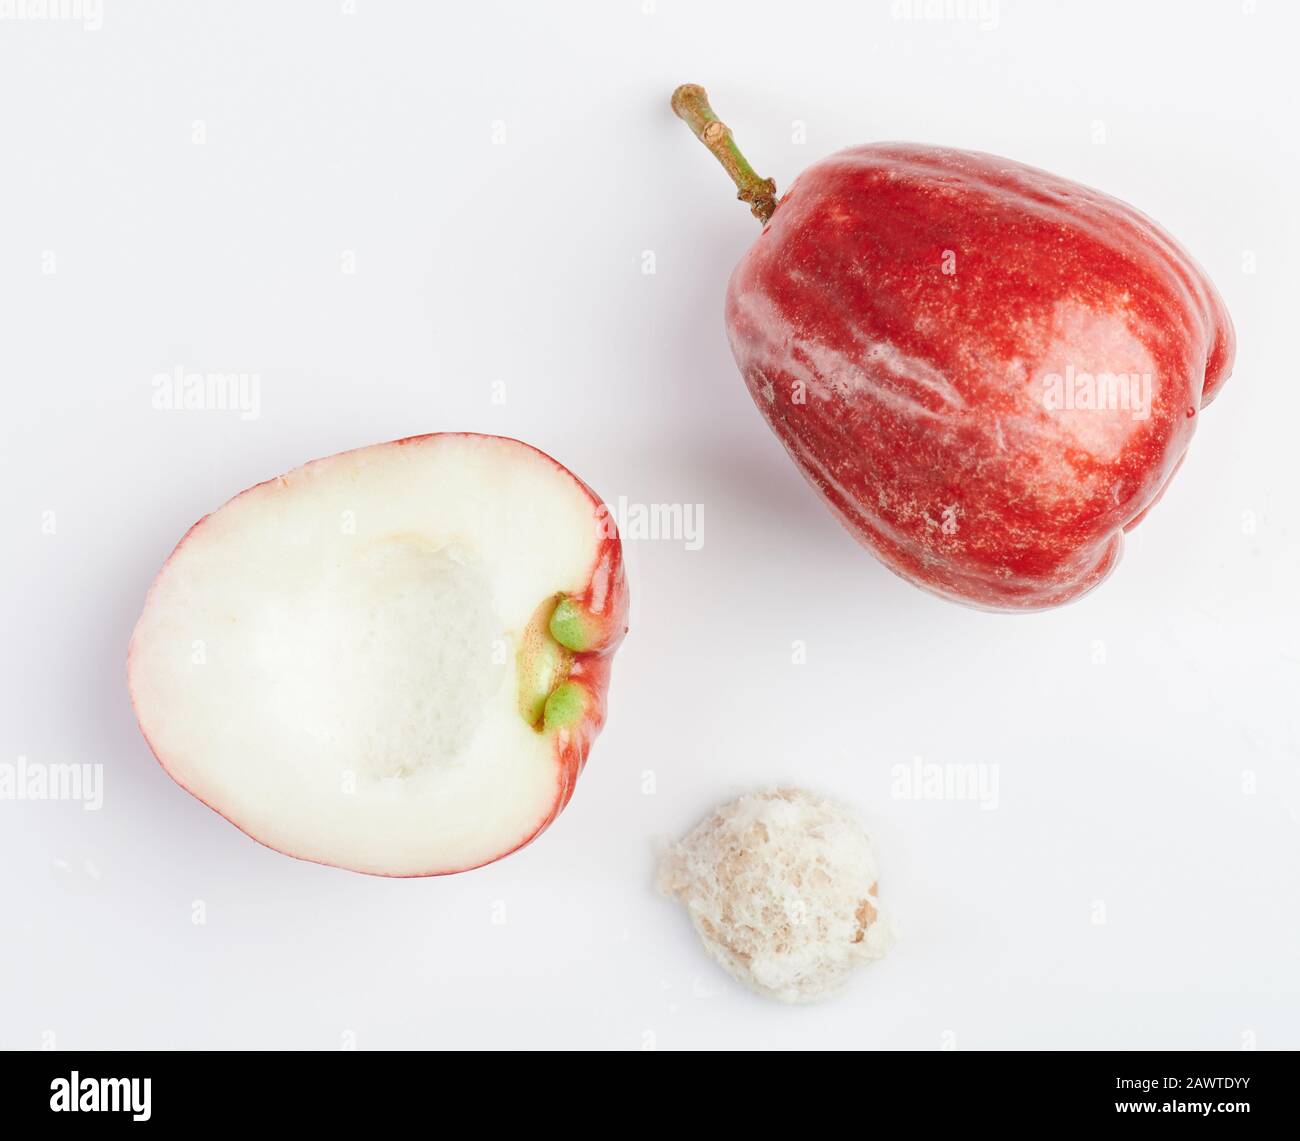 Mela rossa frutta esotica su sfondo bianco studio Foto Stock